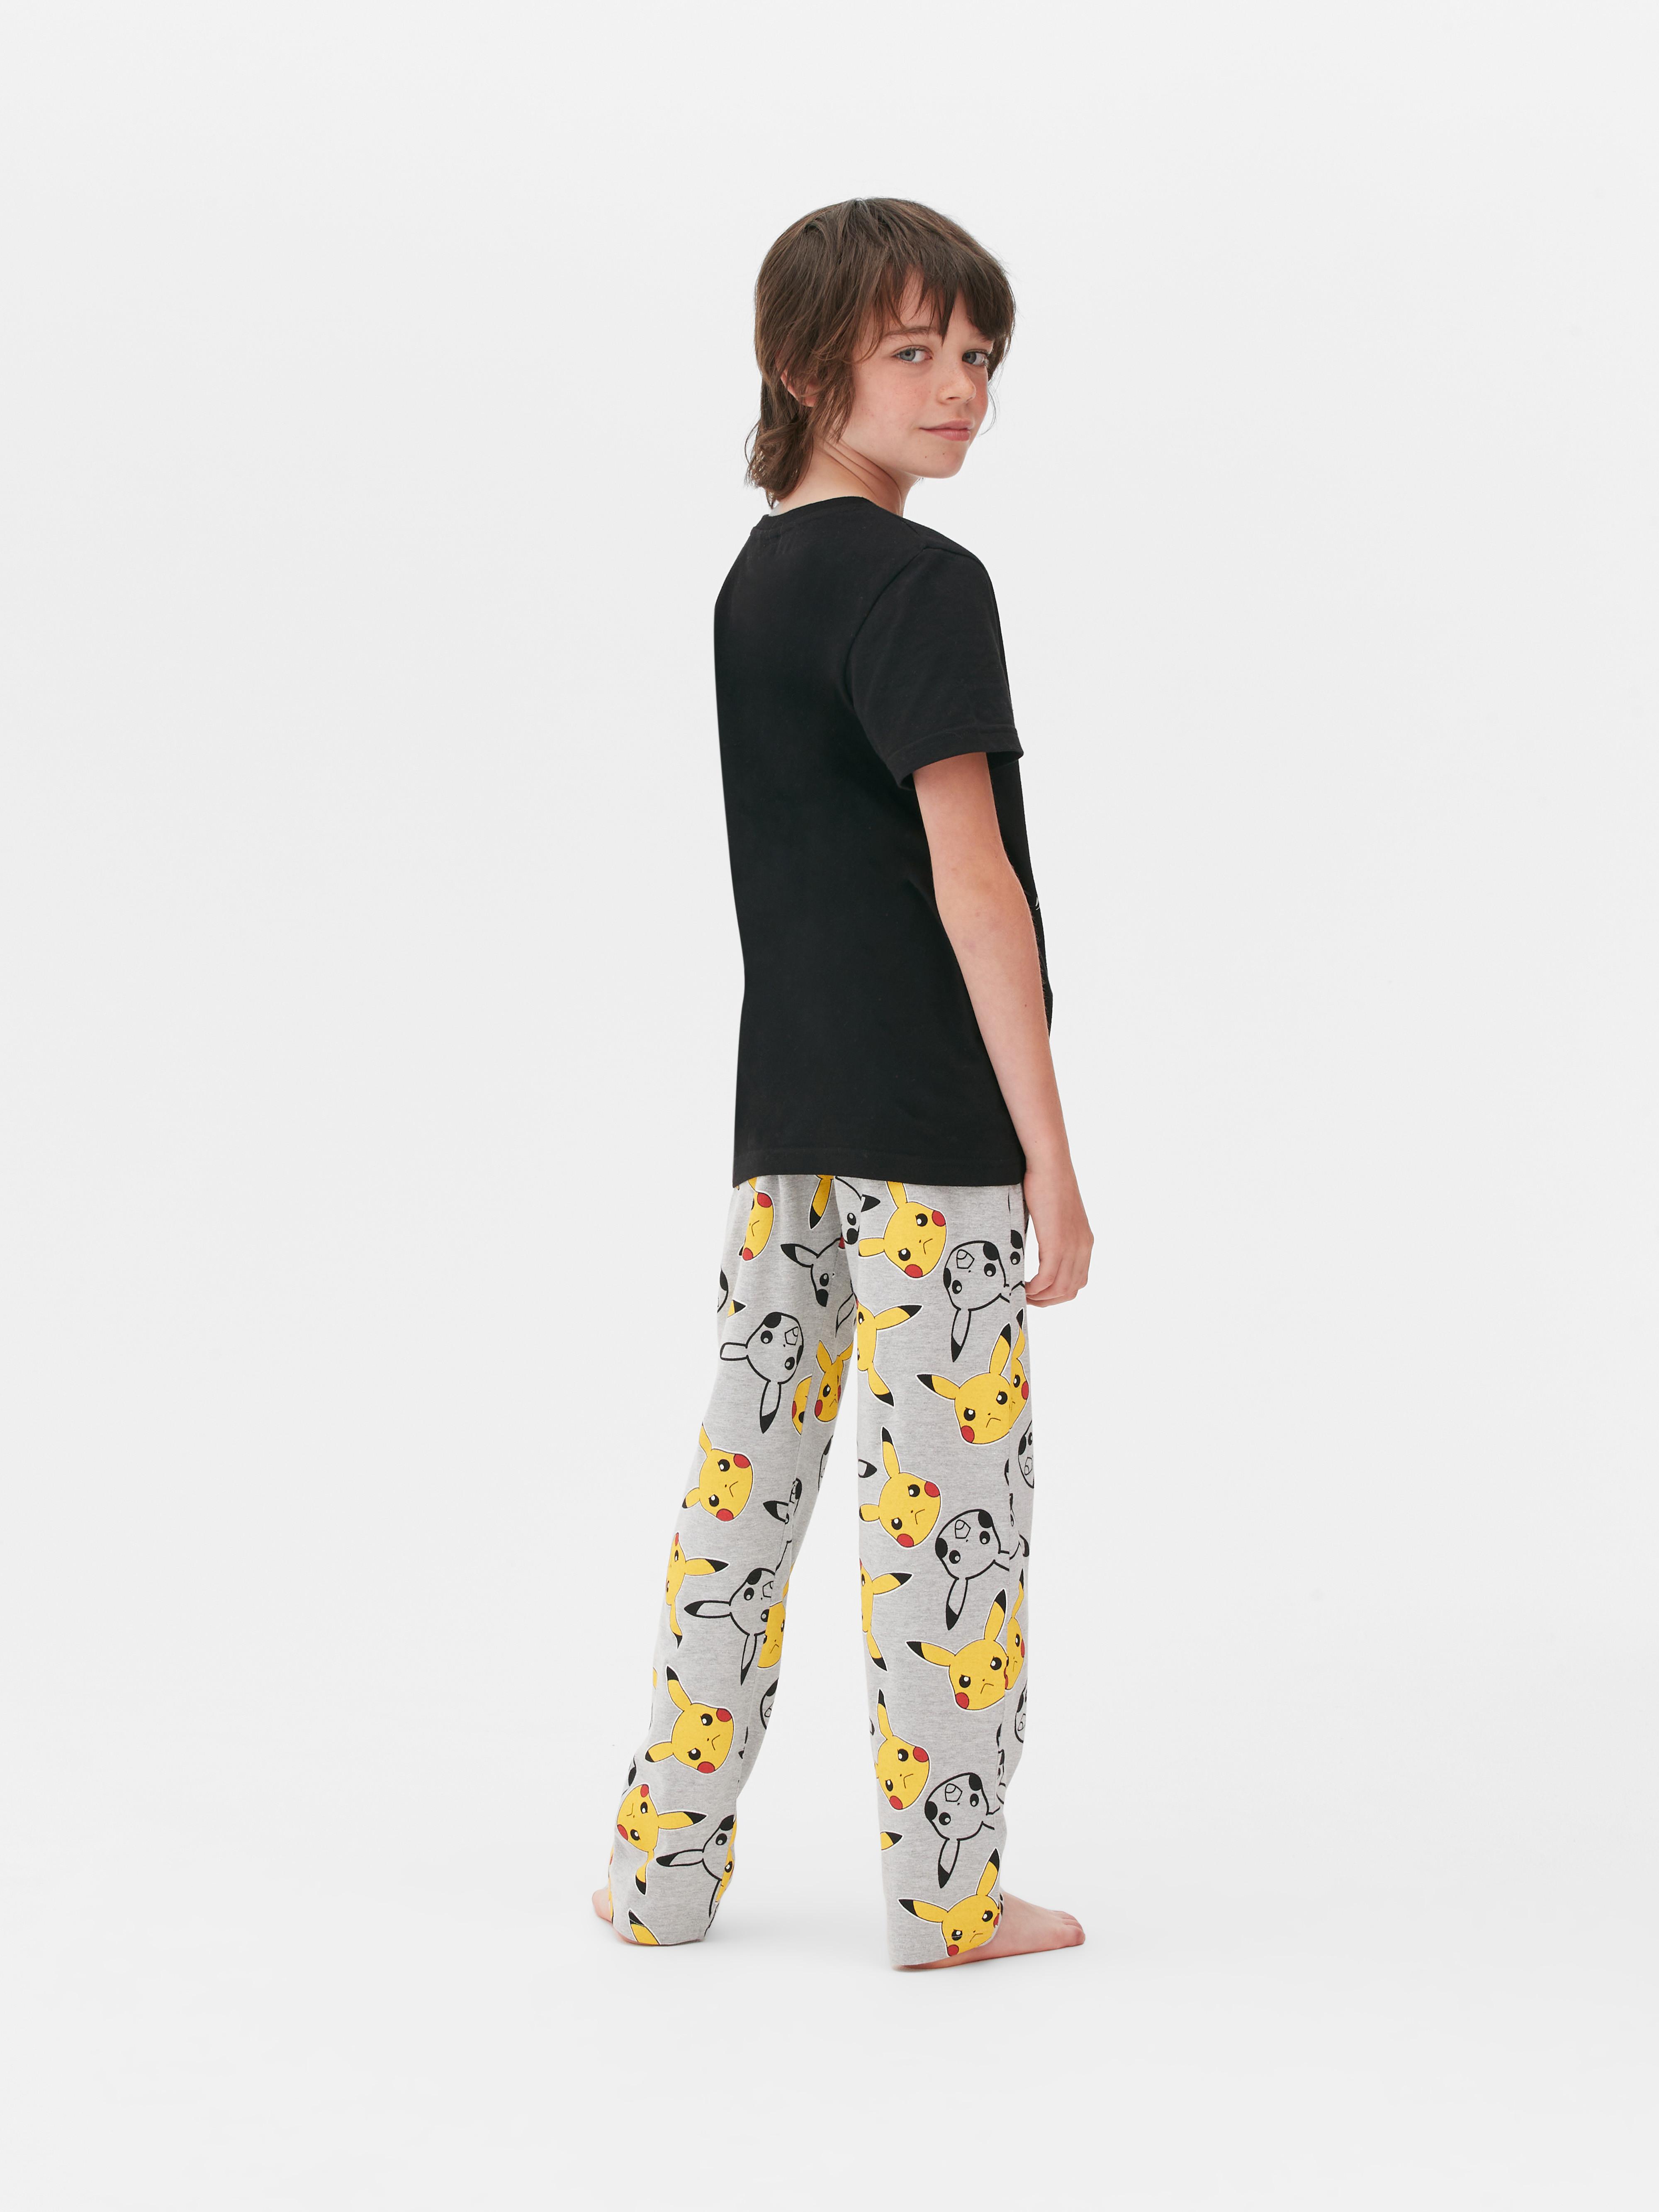 2pk Pokémon Short Sleeve Pyjama Sets